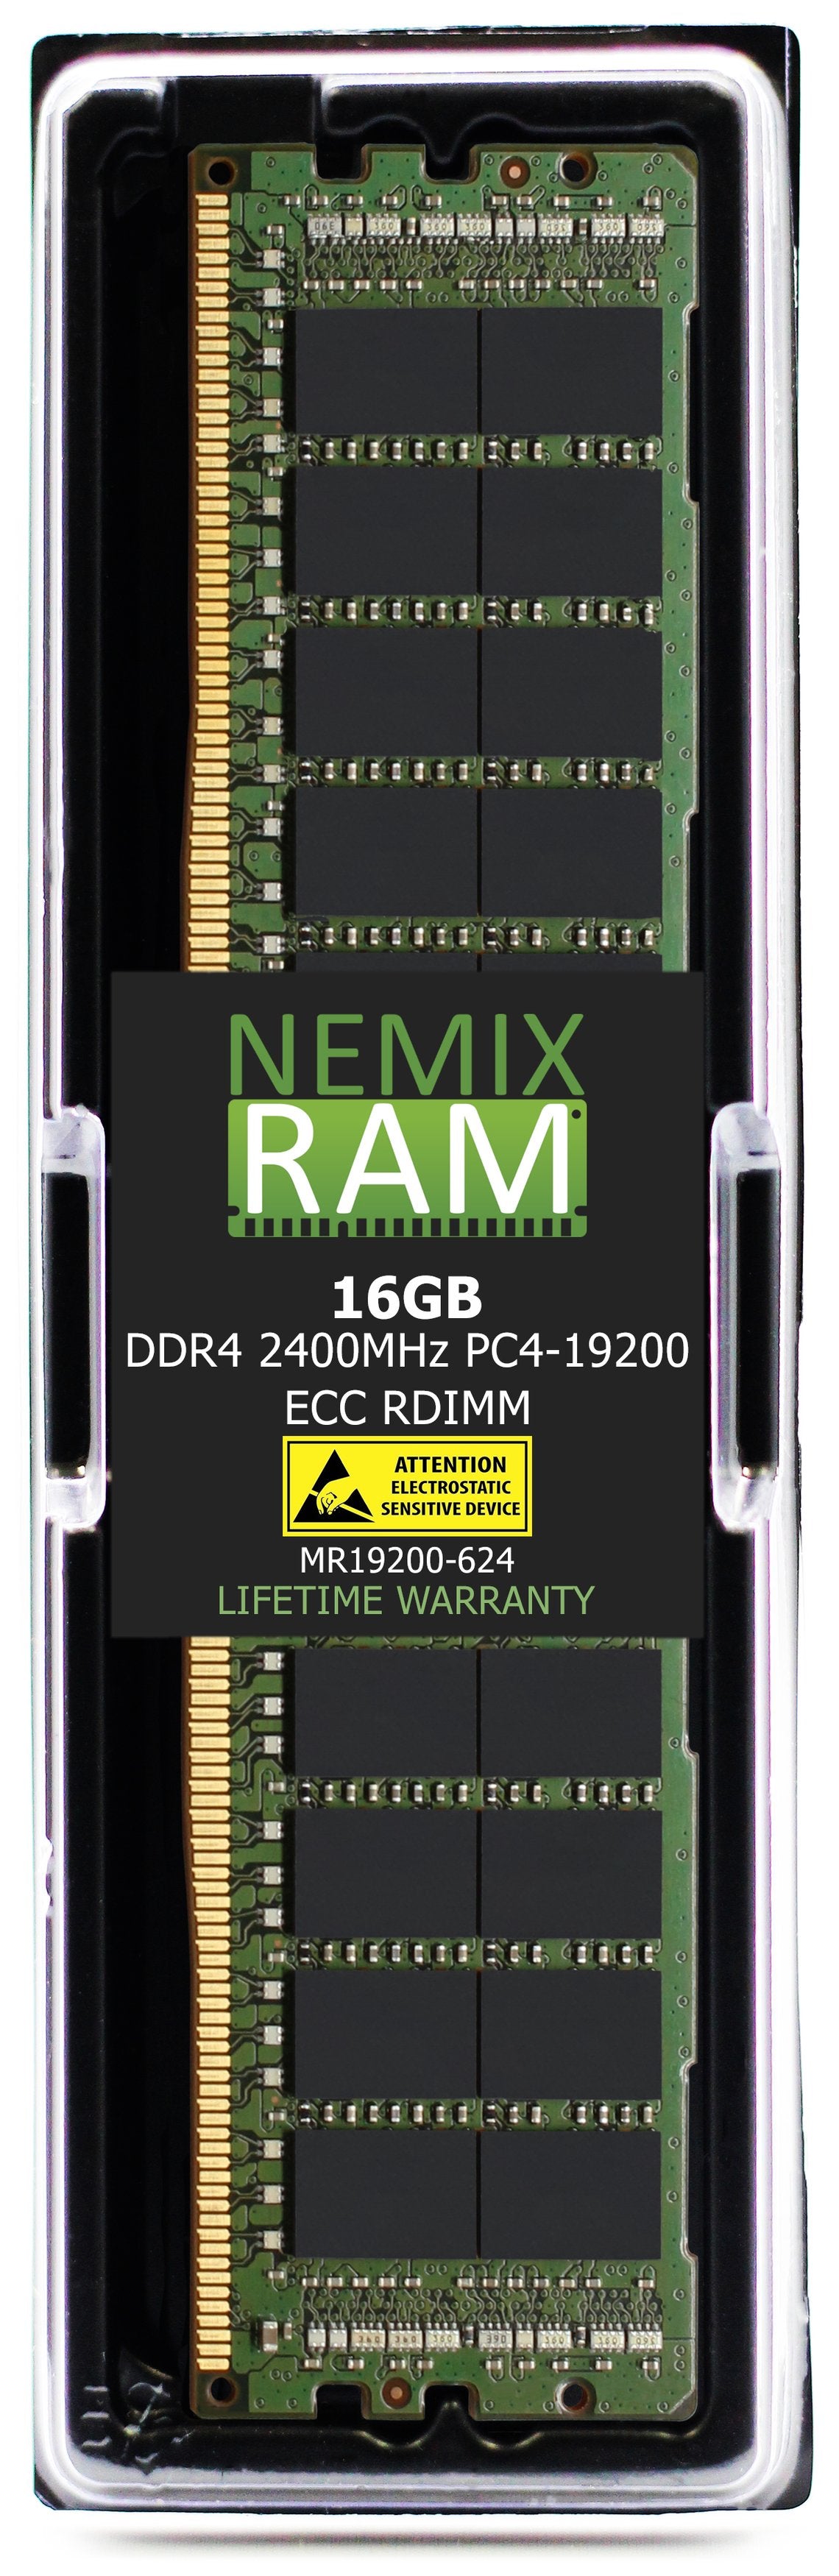 16GB DDR4 2400MHZ PC4-19200 RDIMM Compatible with Supermicro MEM-DR416L-SL01-ER24